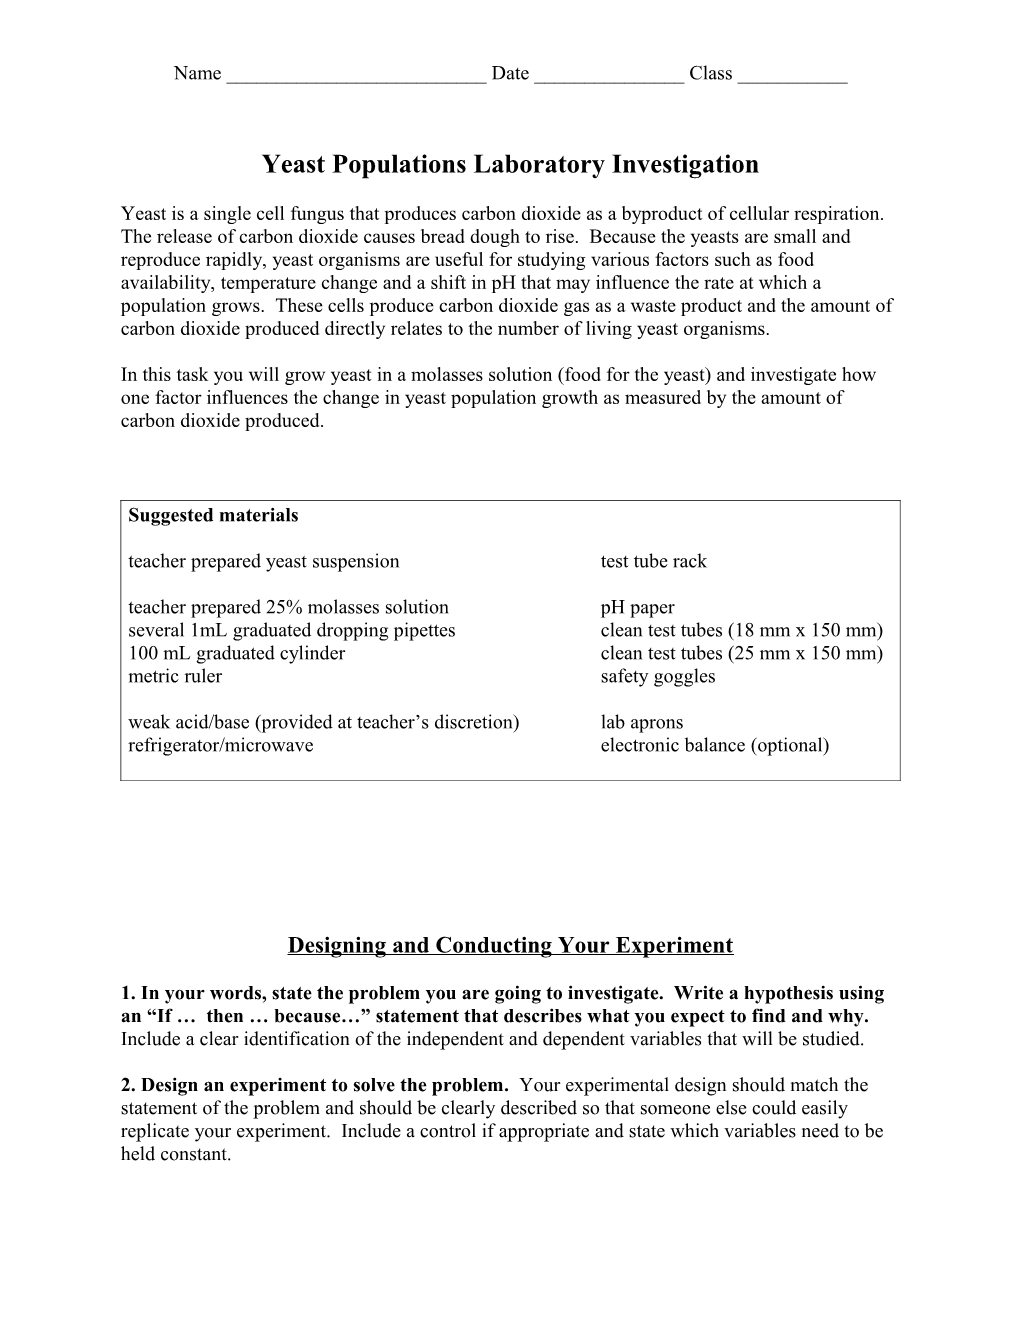 Yeast Populations Laboratory Investigation